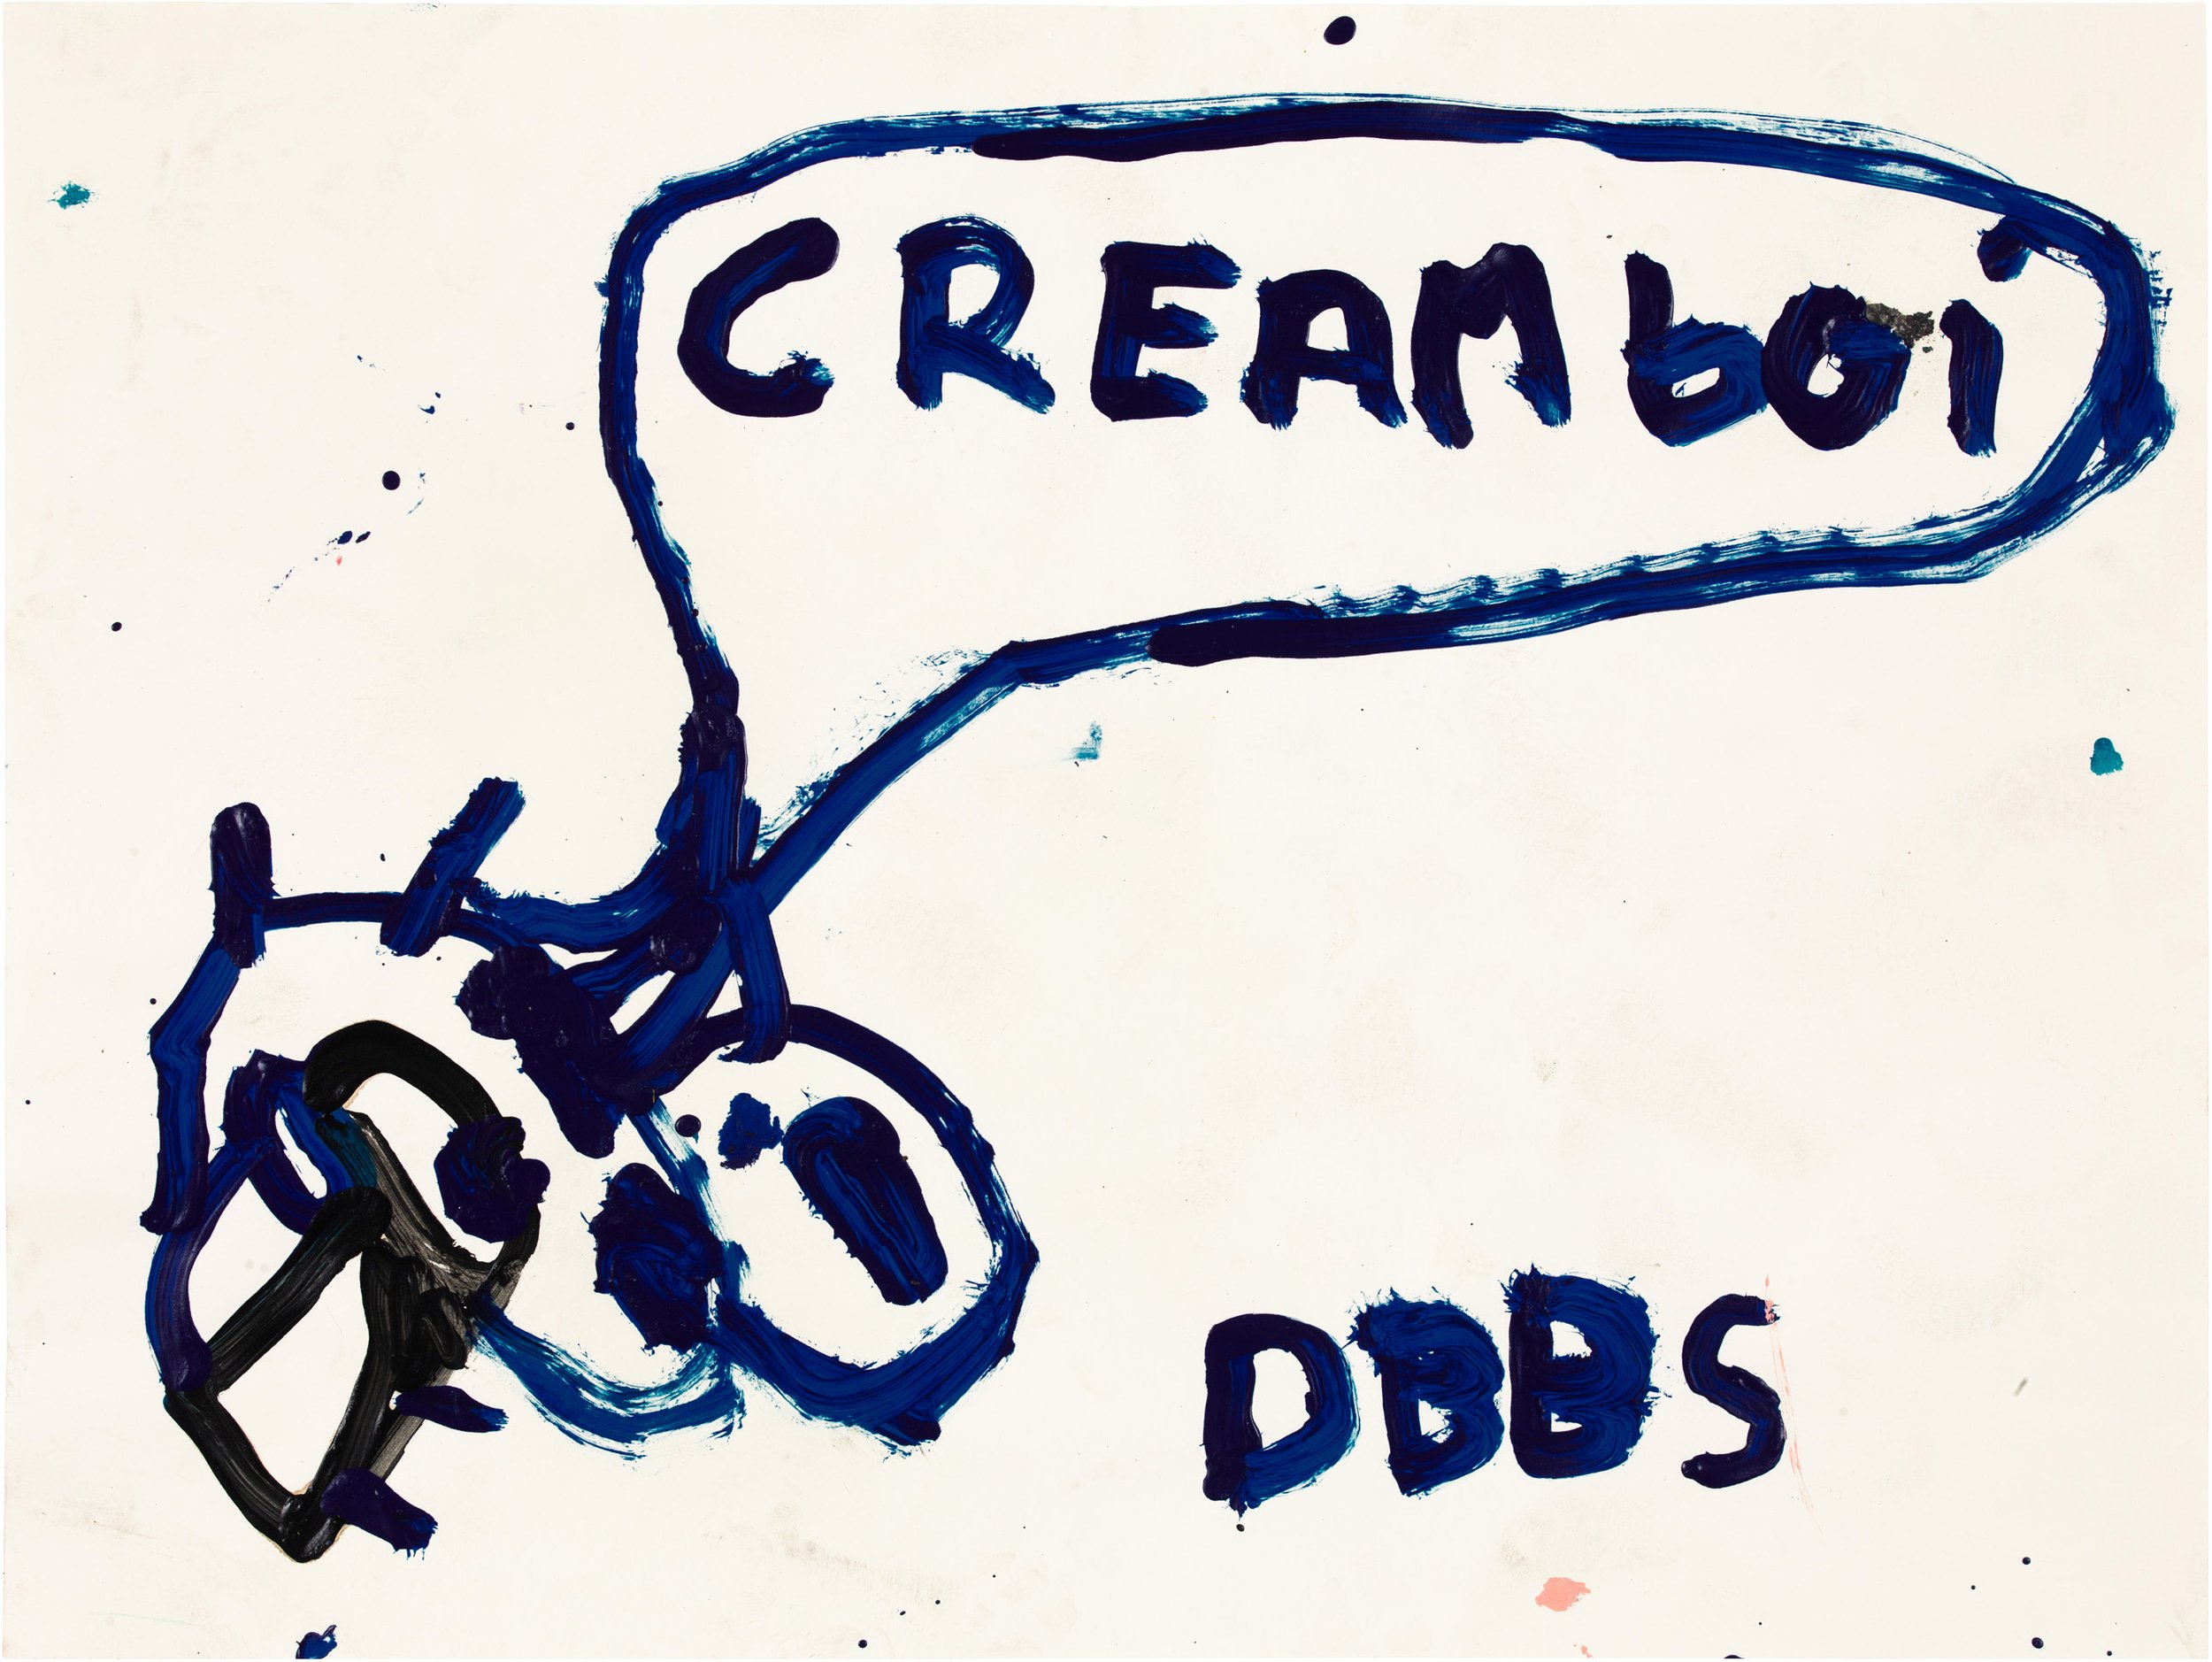  Drew Beattie and Ben Shepard DBBS-DRW-2021-193 2021 acrylic on paper 18 x 24 inches 